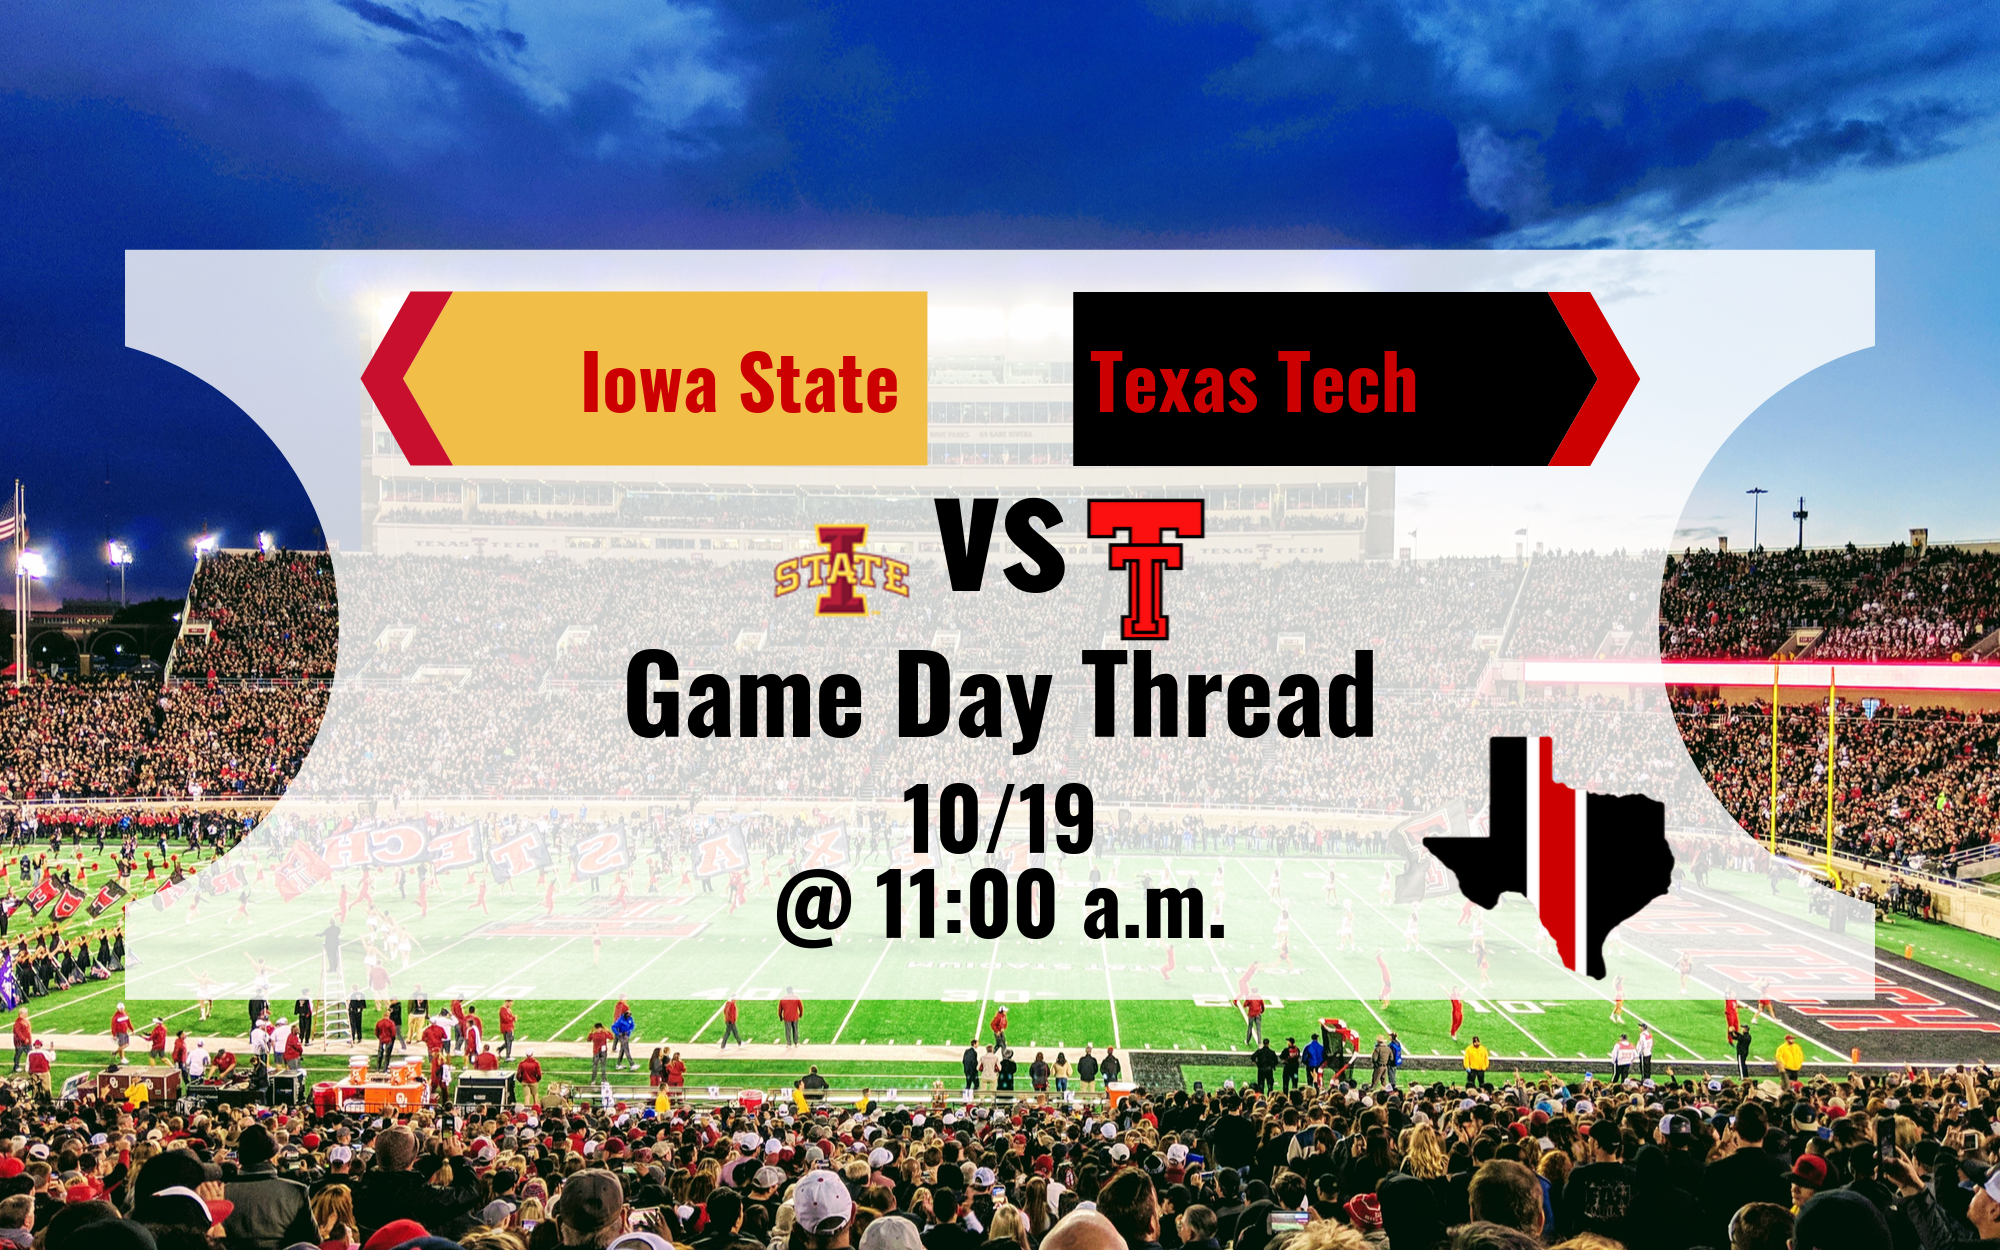 Game Day Thread 2: Iowa State vs. Texas Tech